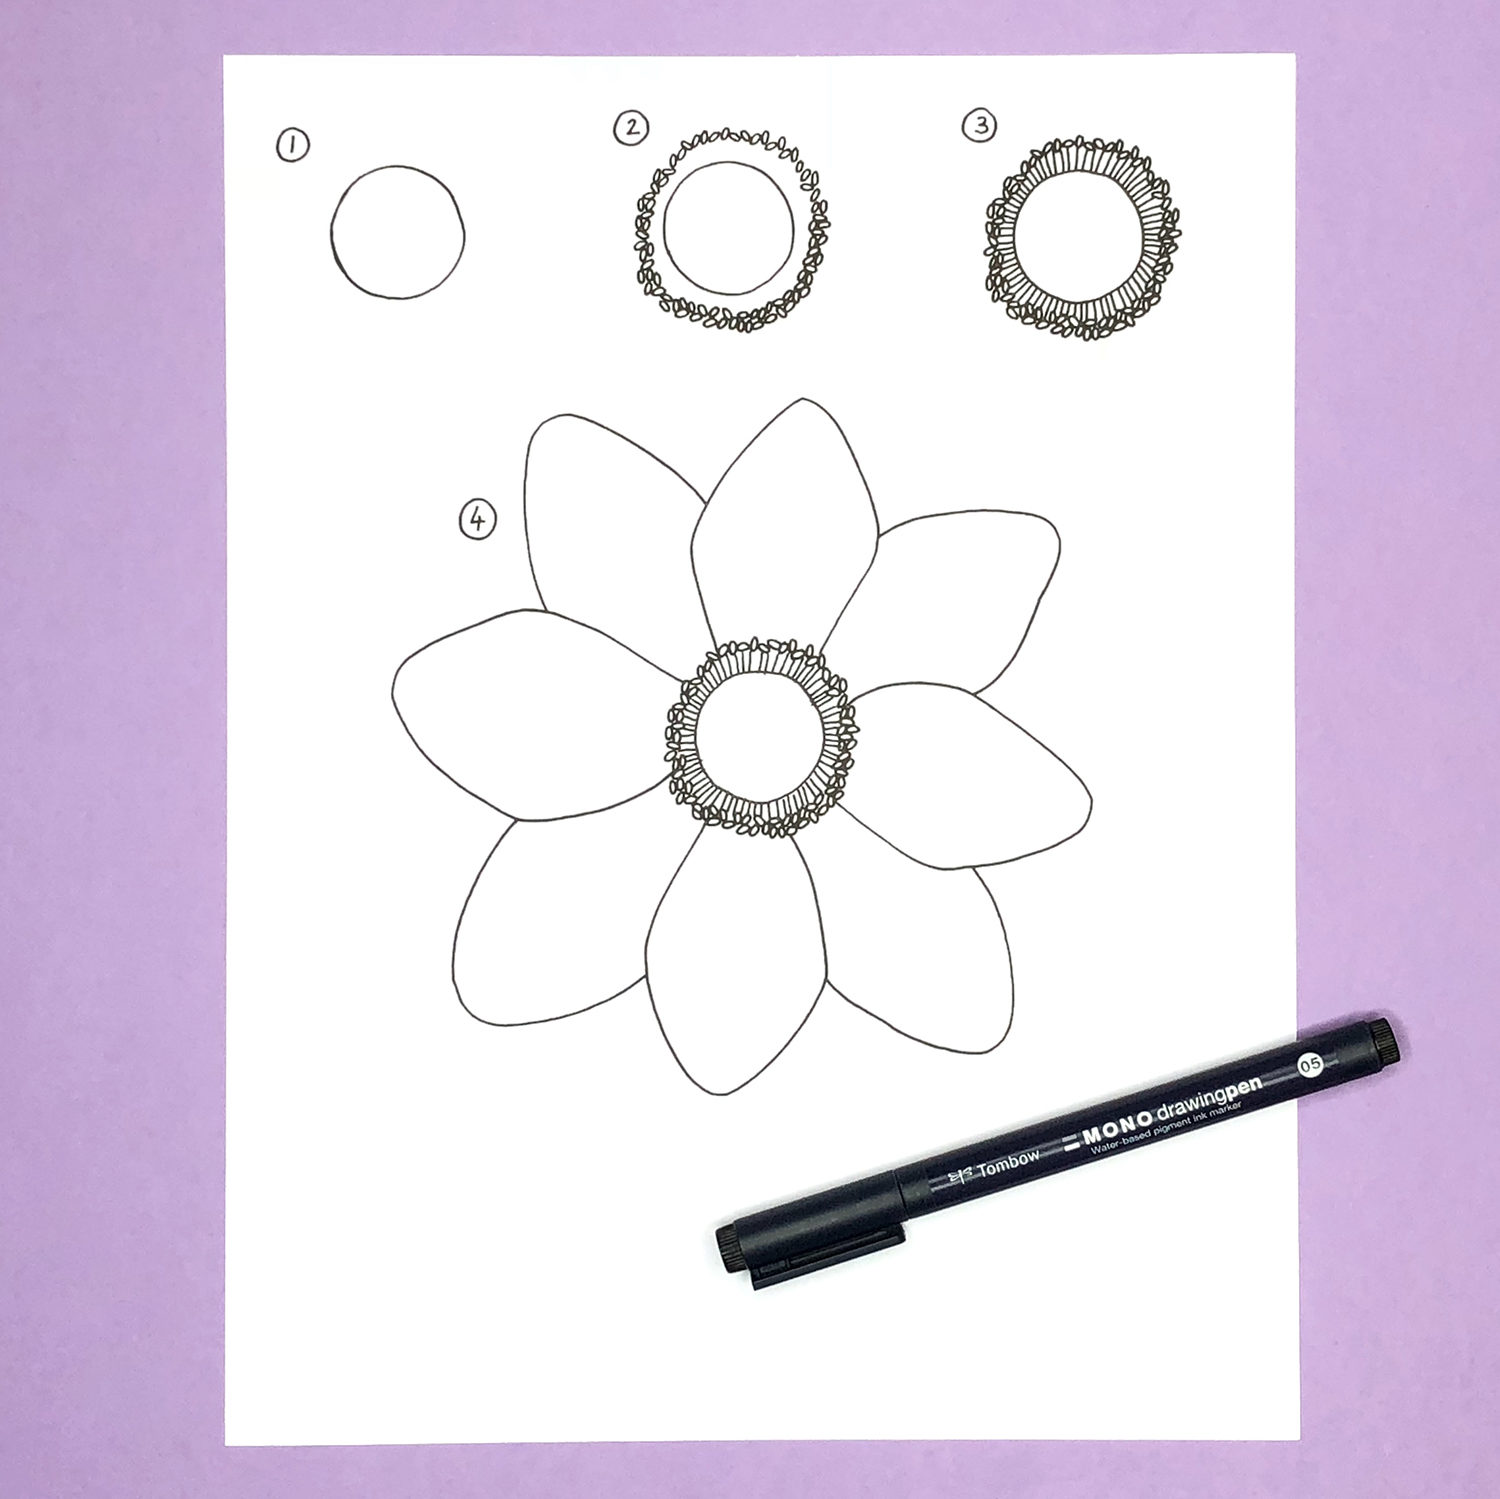 anemone flower illustration